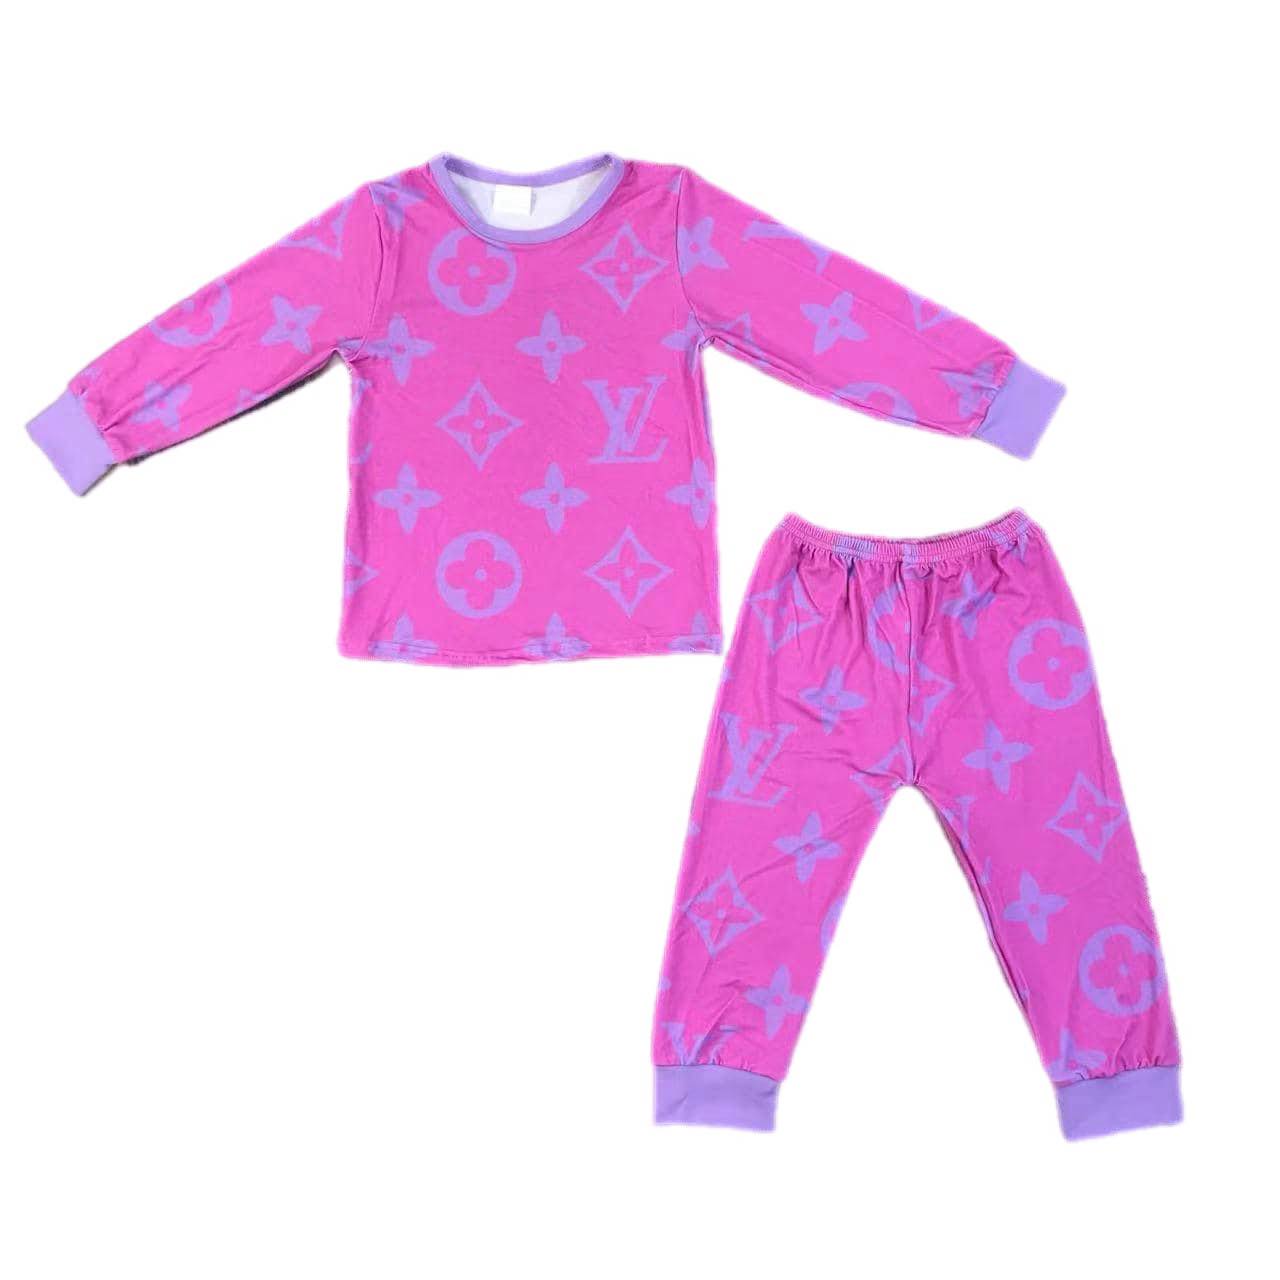 ᴡᴇᴇᴋʟʏ ᴘʀᴇ ᴏʀᴅᴇʀ Bamboo Inspired Pink Pajamas